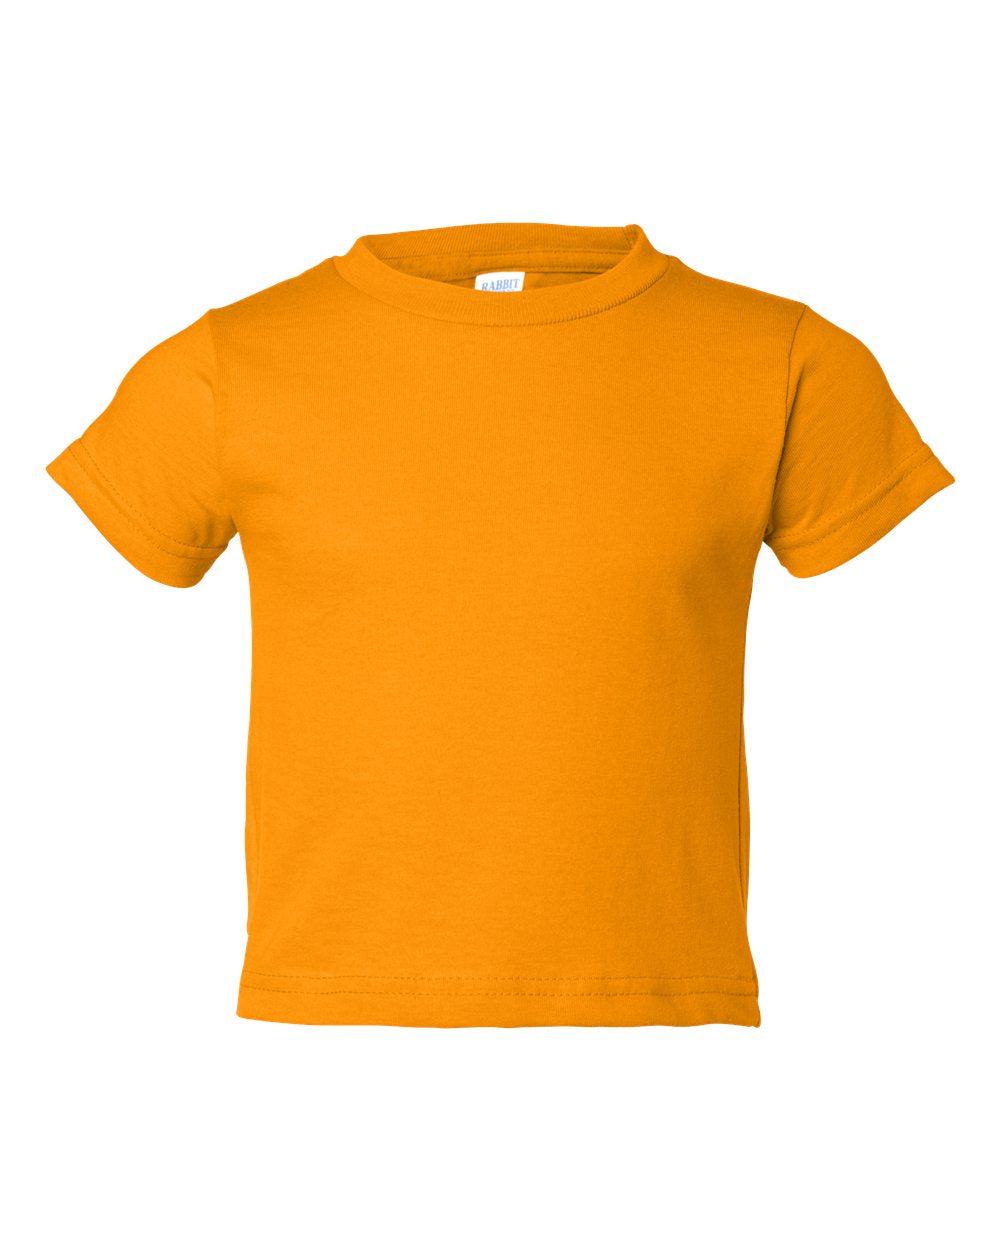 Toddler Jersey T-shirt, 100% Cotton, Gold